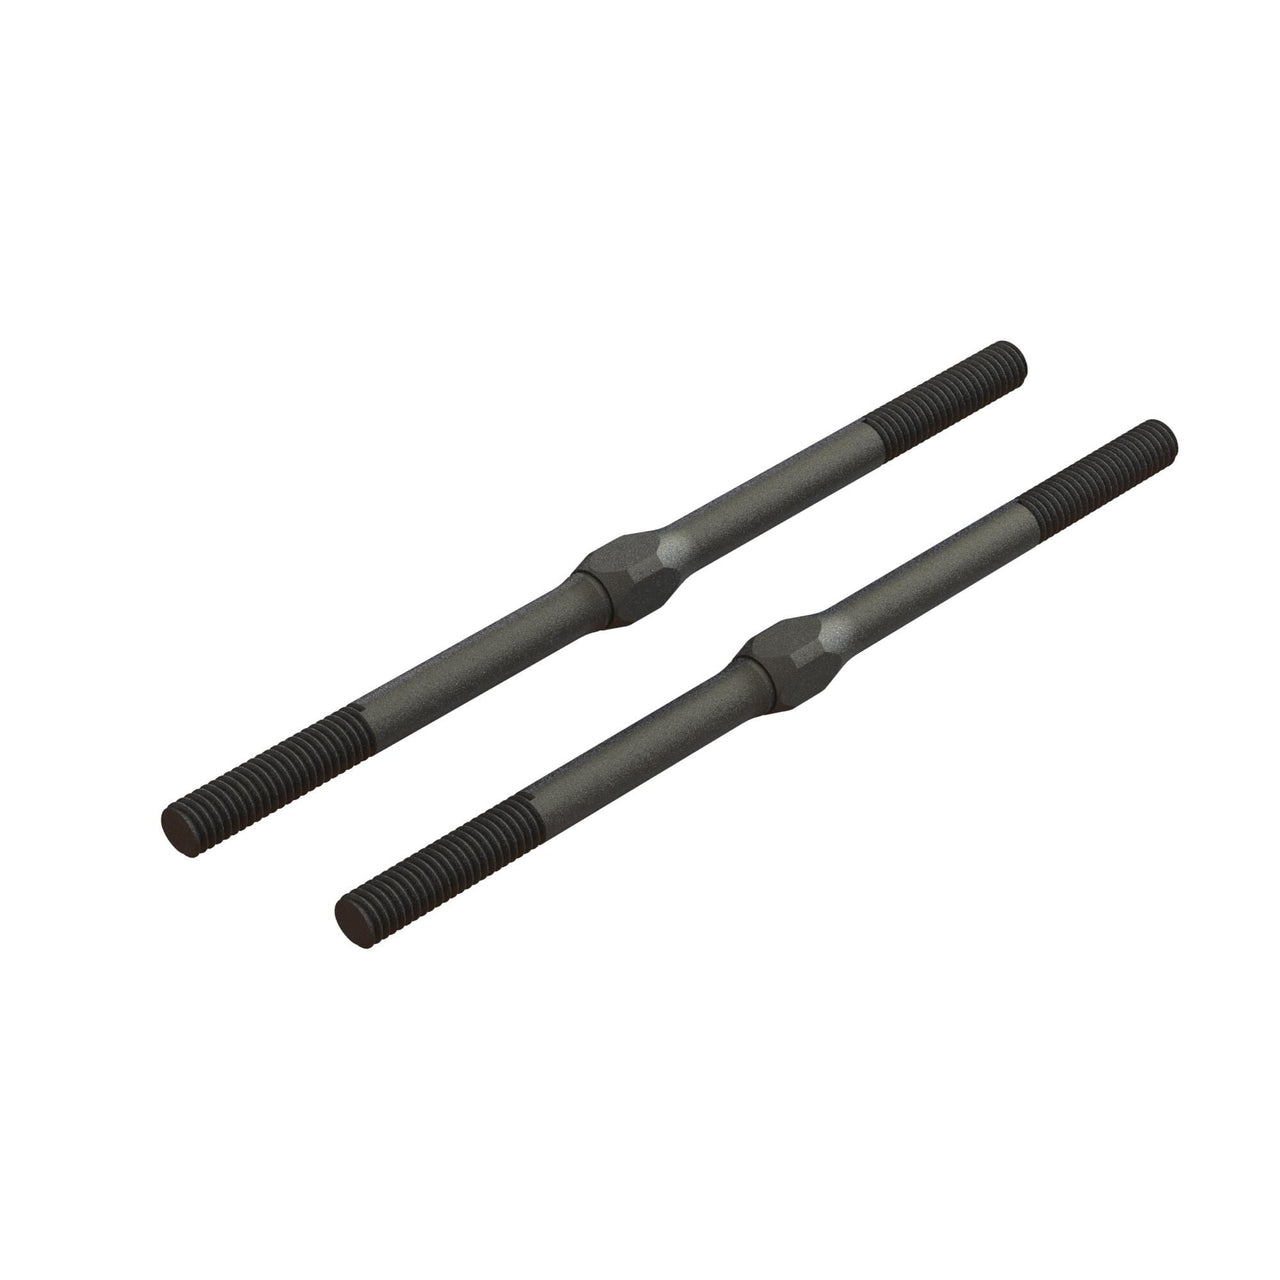 Steel Turnbuckle, M4 x 95mm Black (2) ara330717